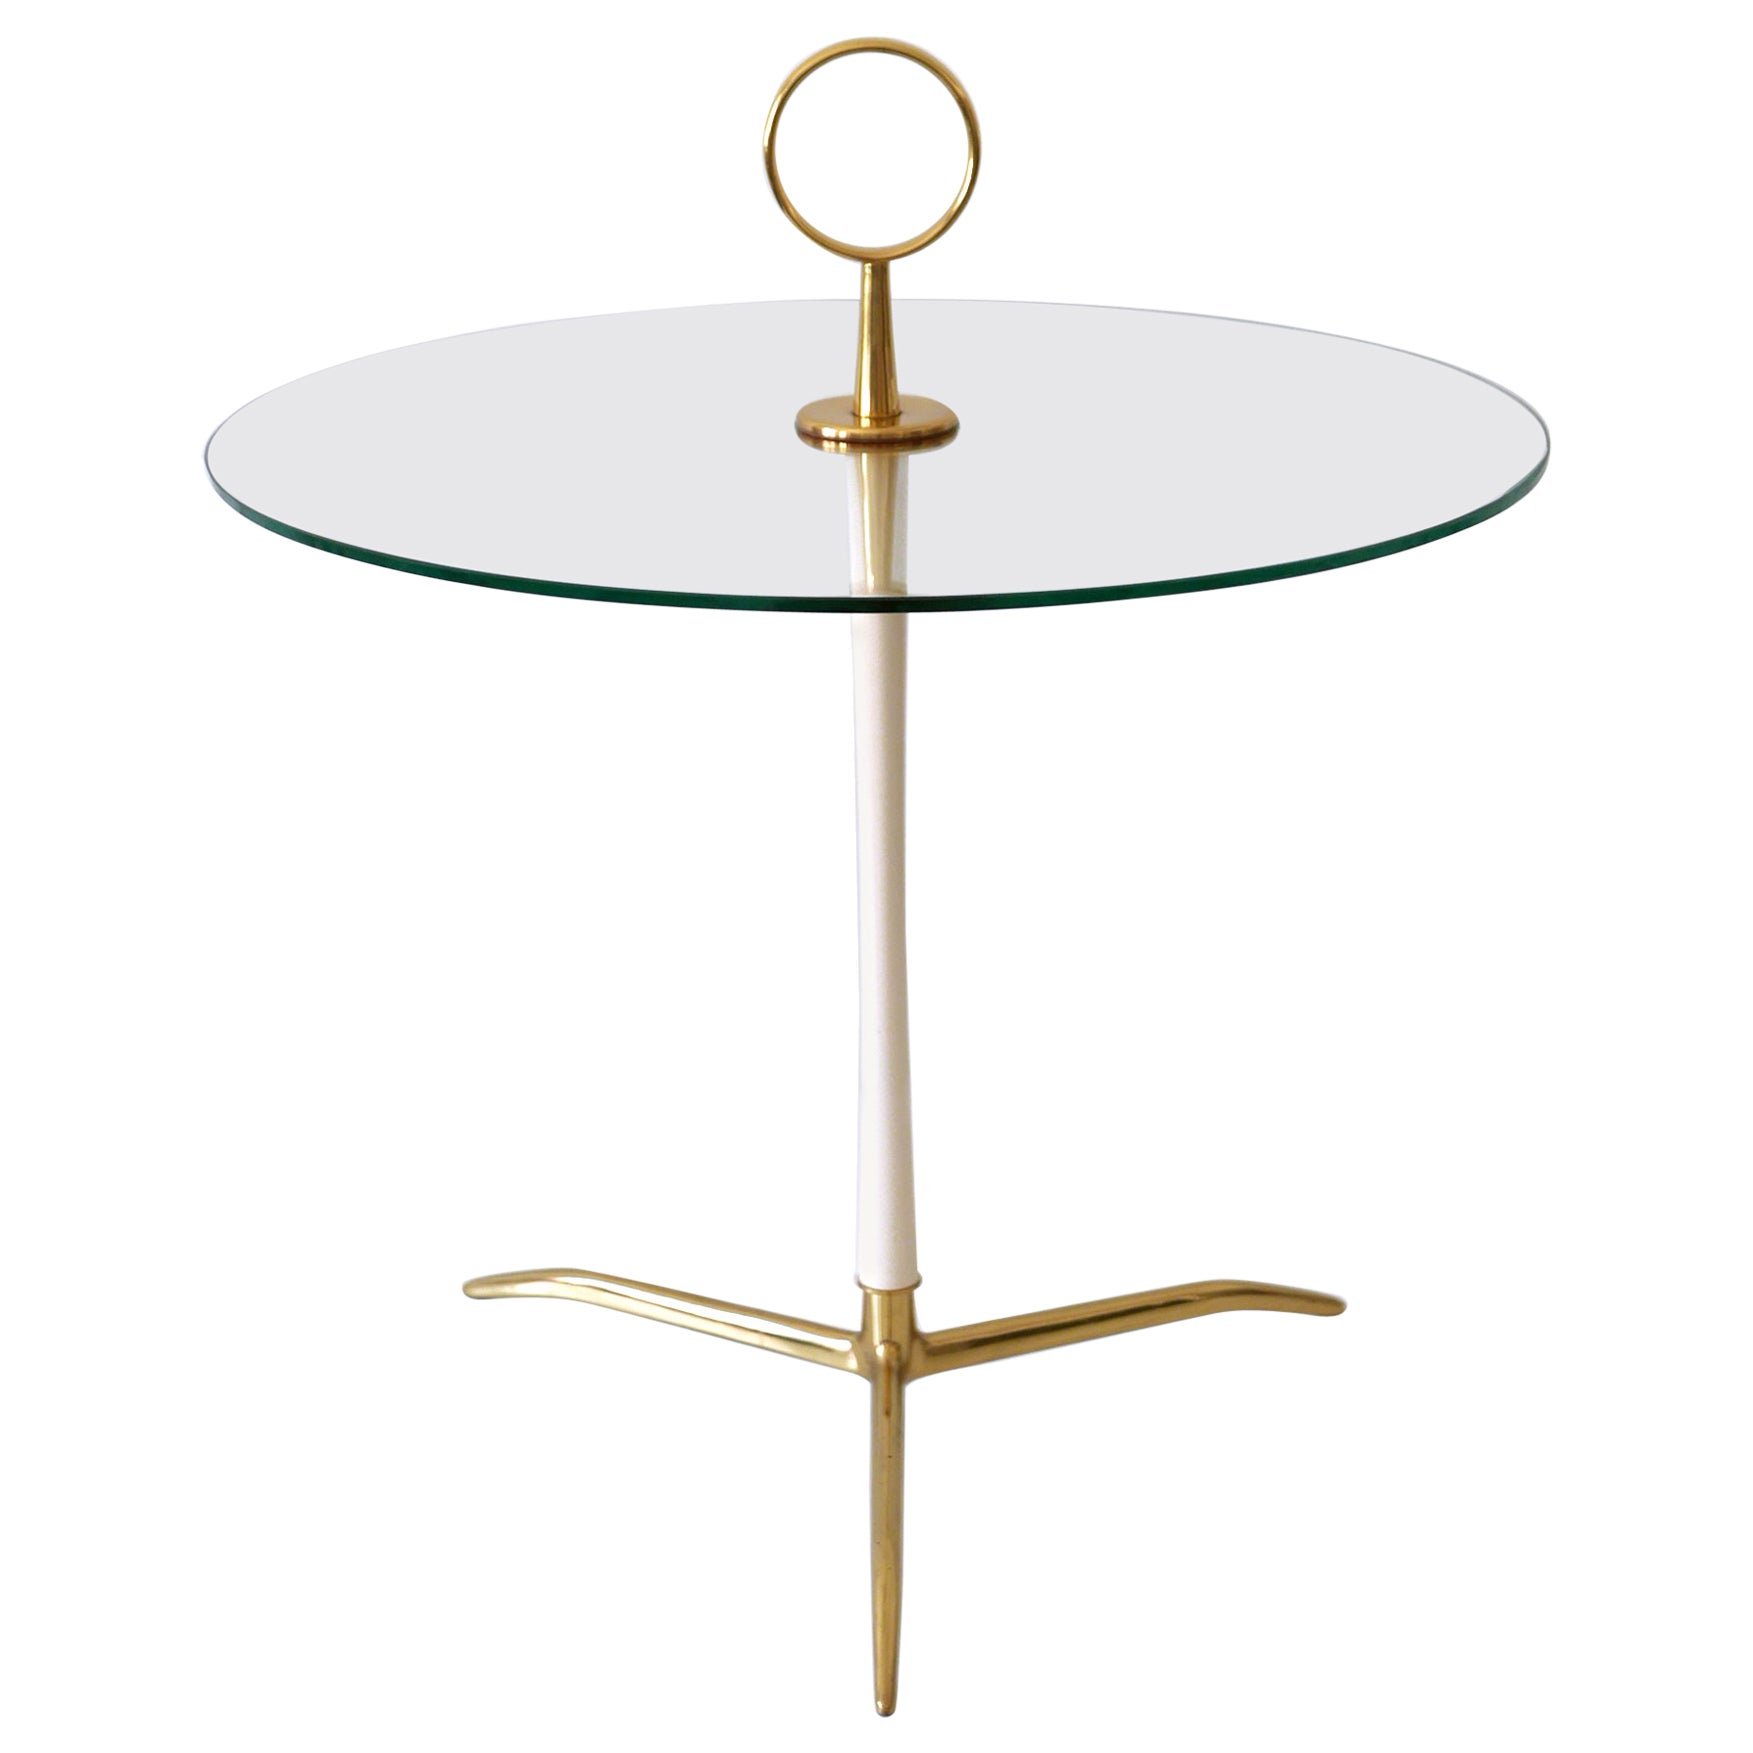 Elegant Mid-Century Modern Side Table by Vereinigte Werkstätten Germany 1950s For Sale